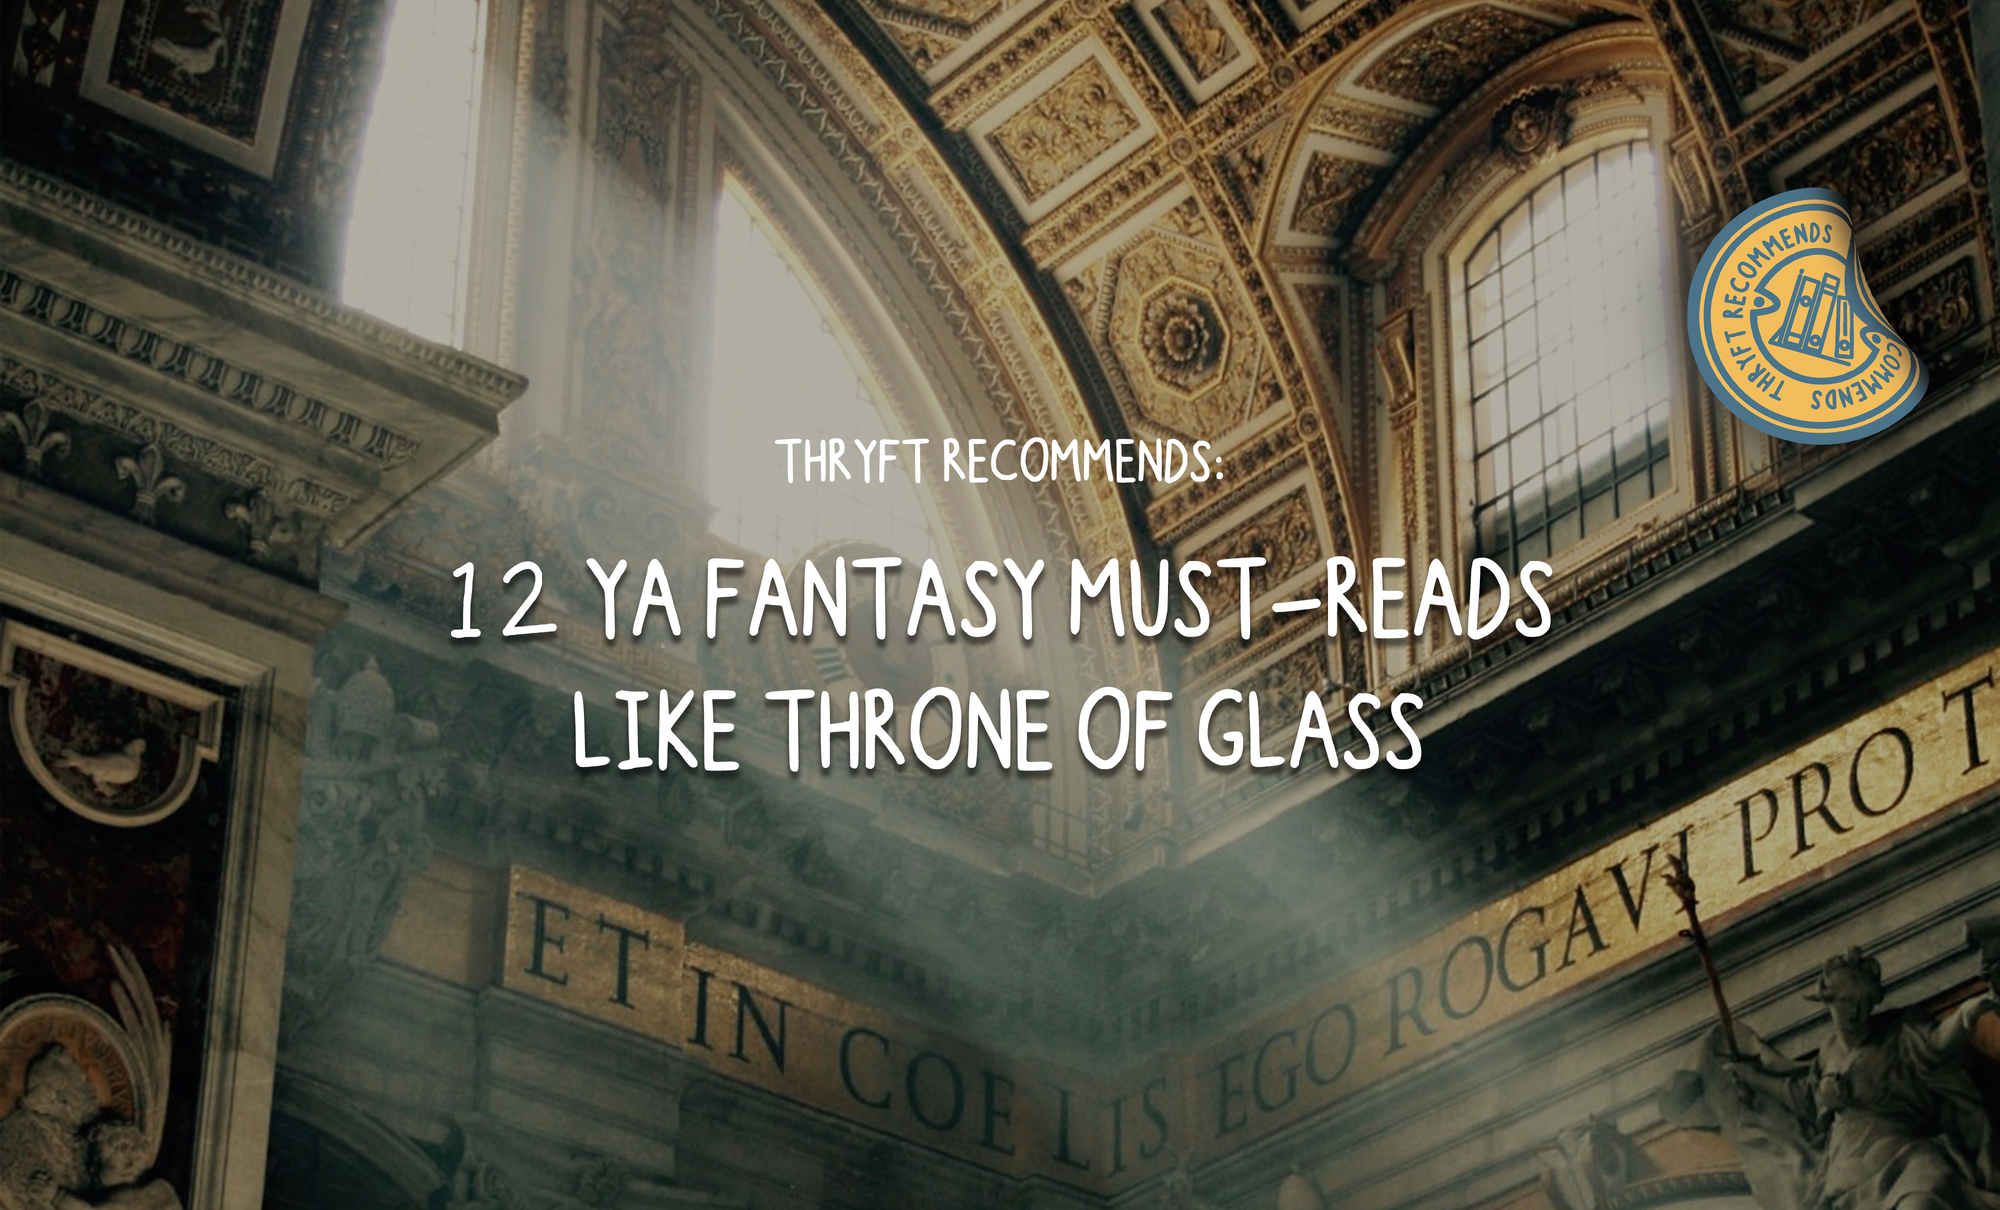 12 YA Fantasy Must-reads like Throne of Glass